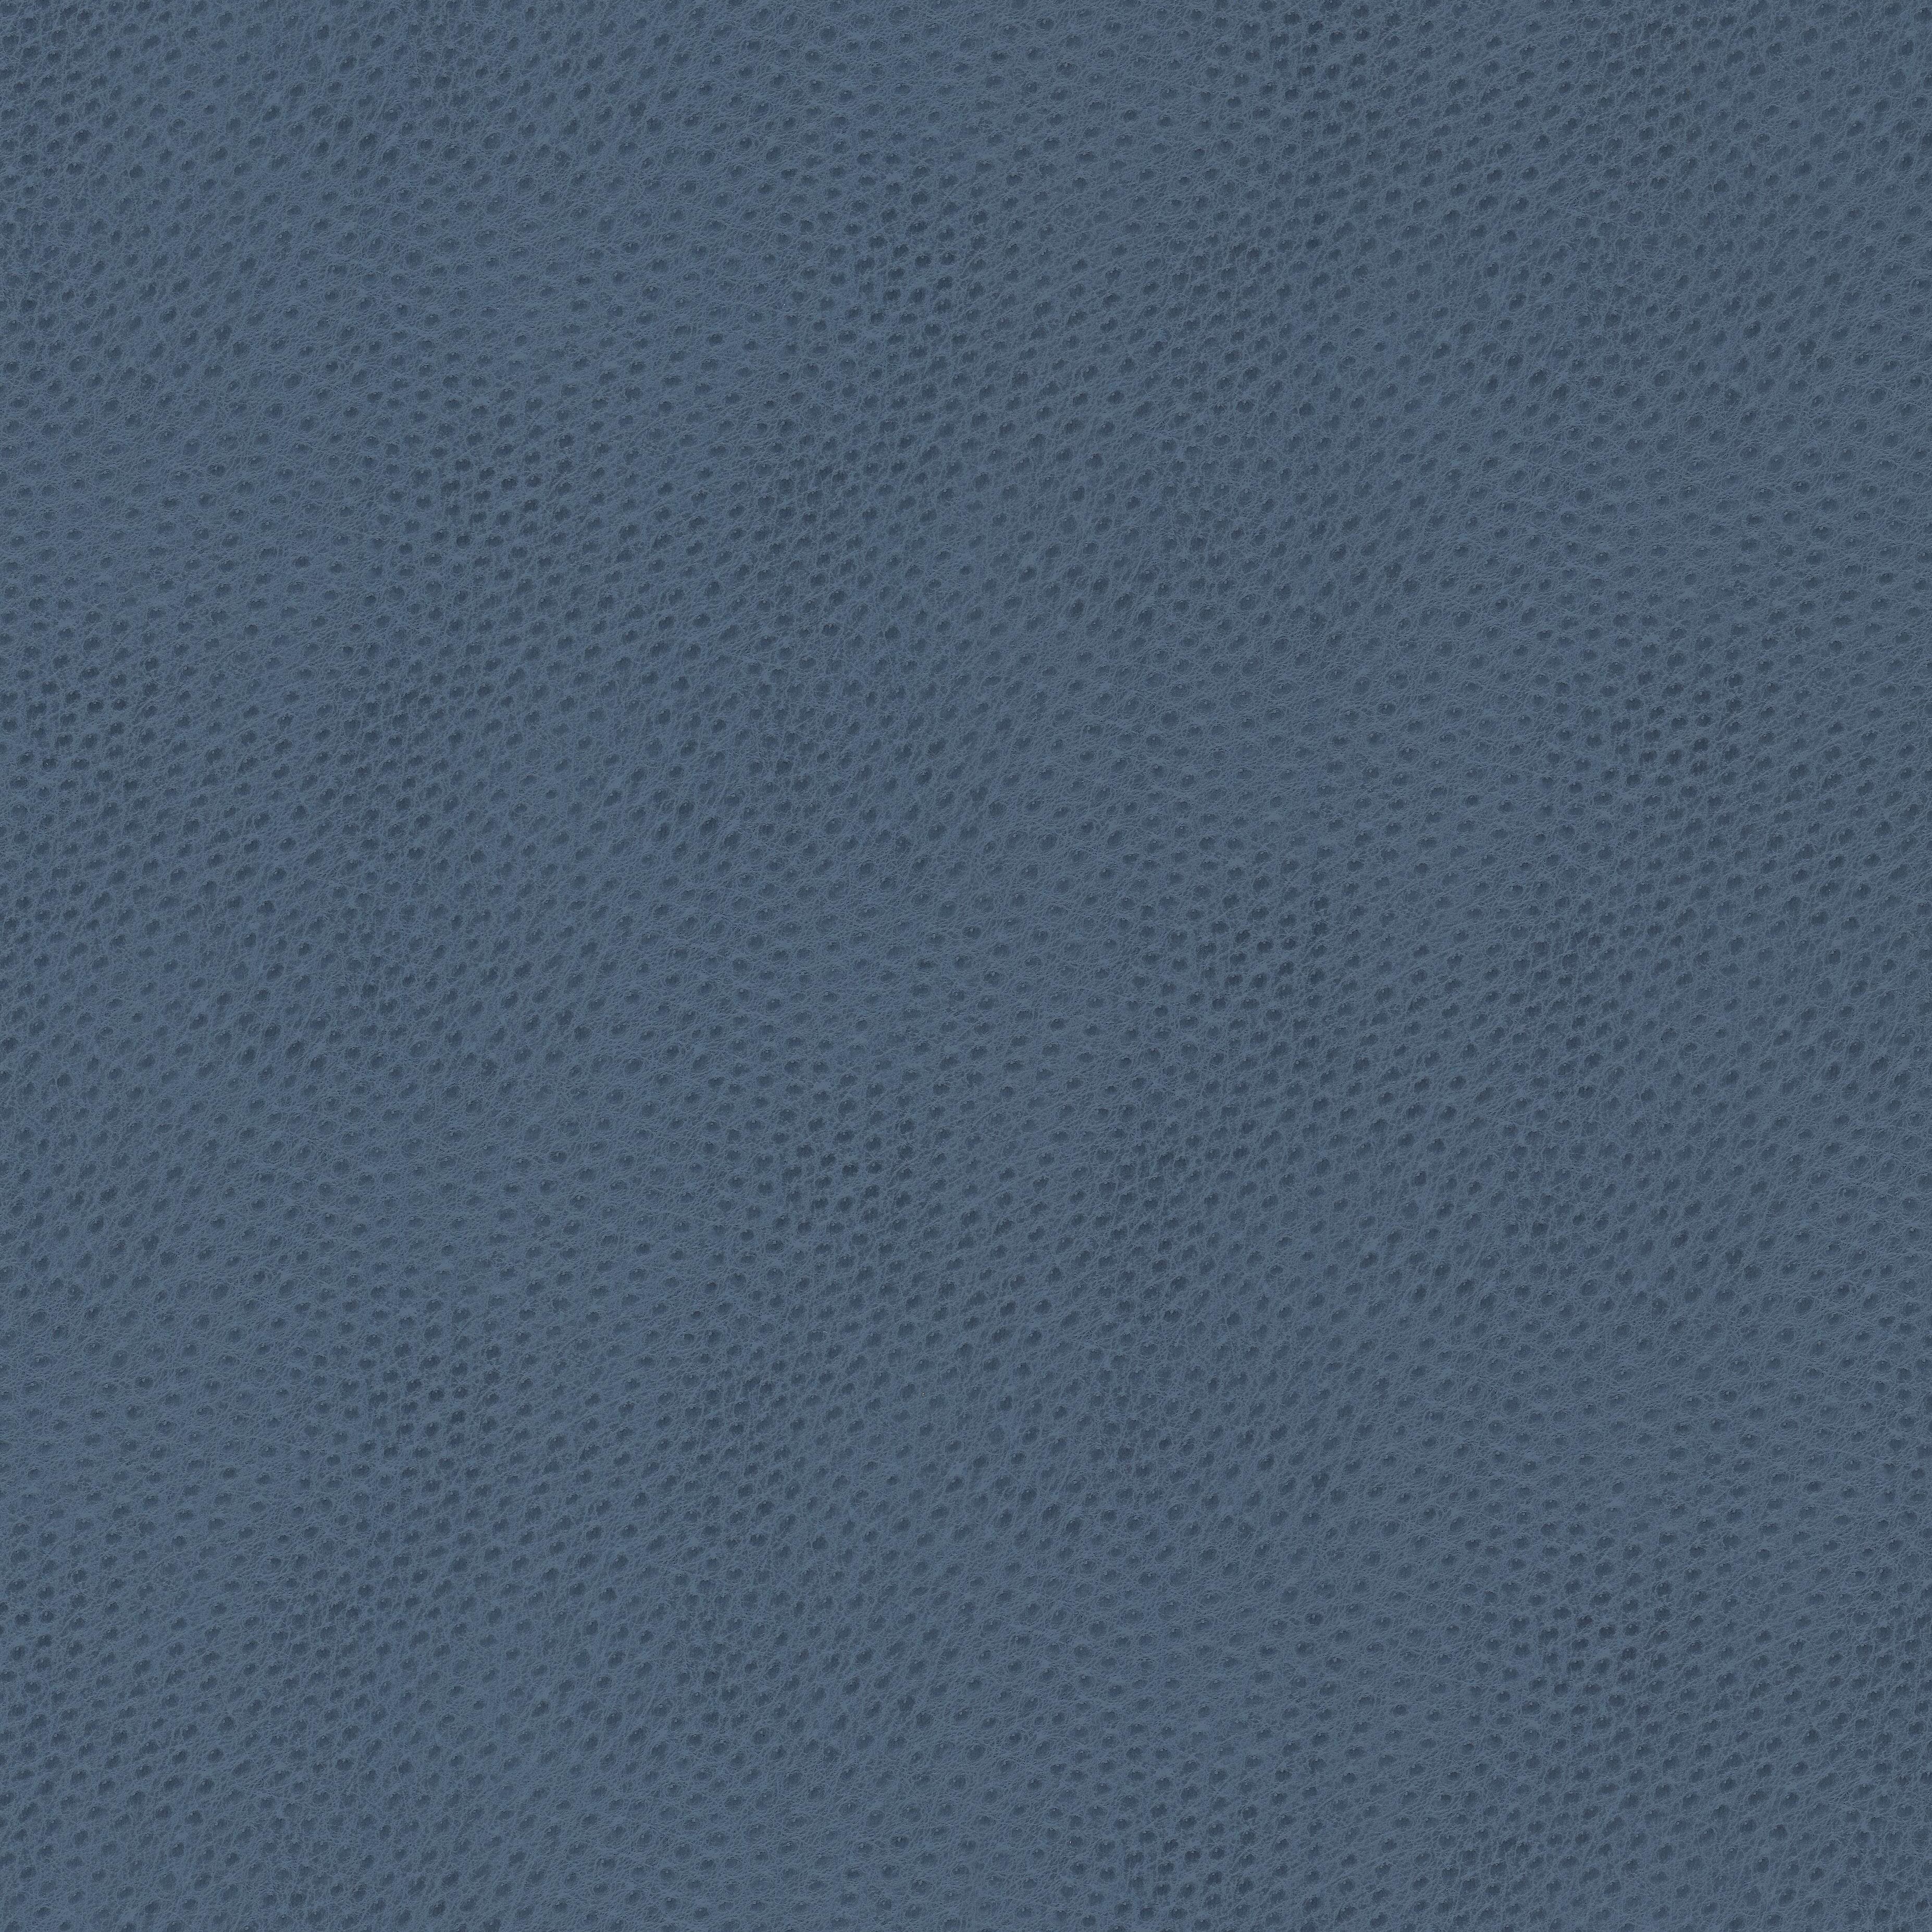 Steeplechase 3 Bluebird by Stout Fabric